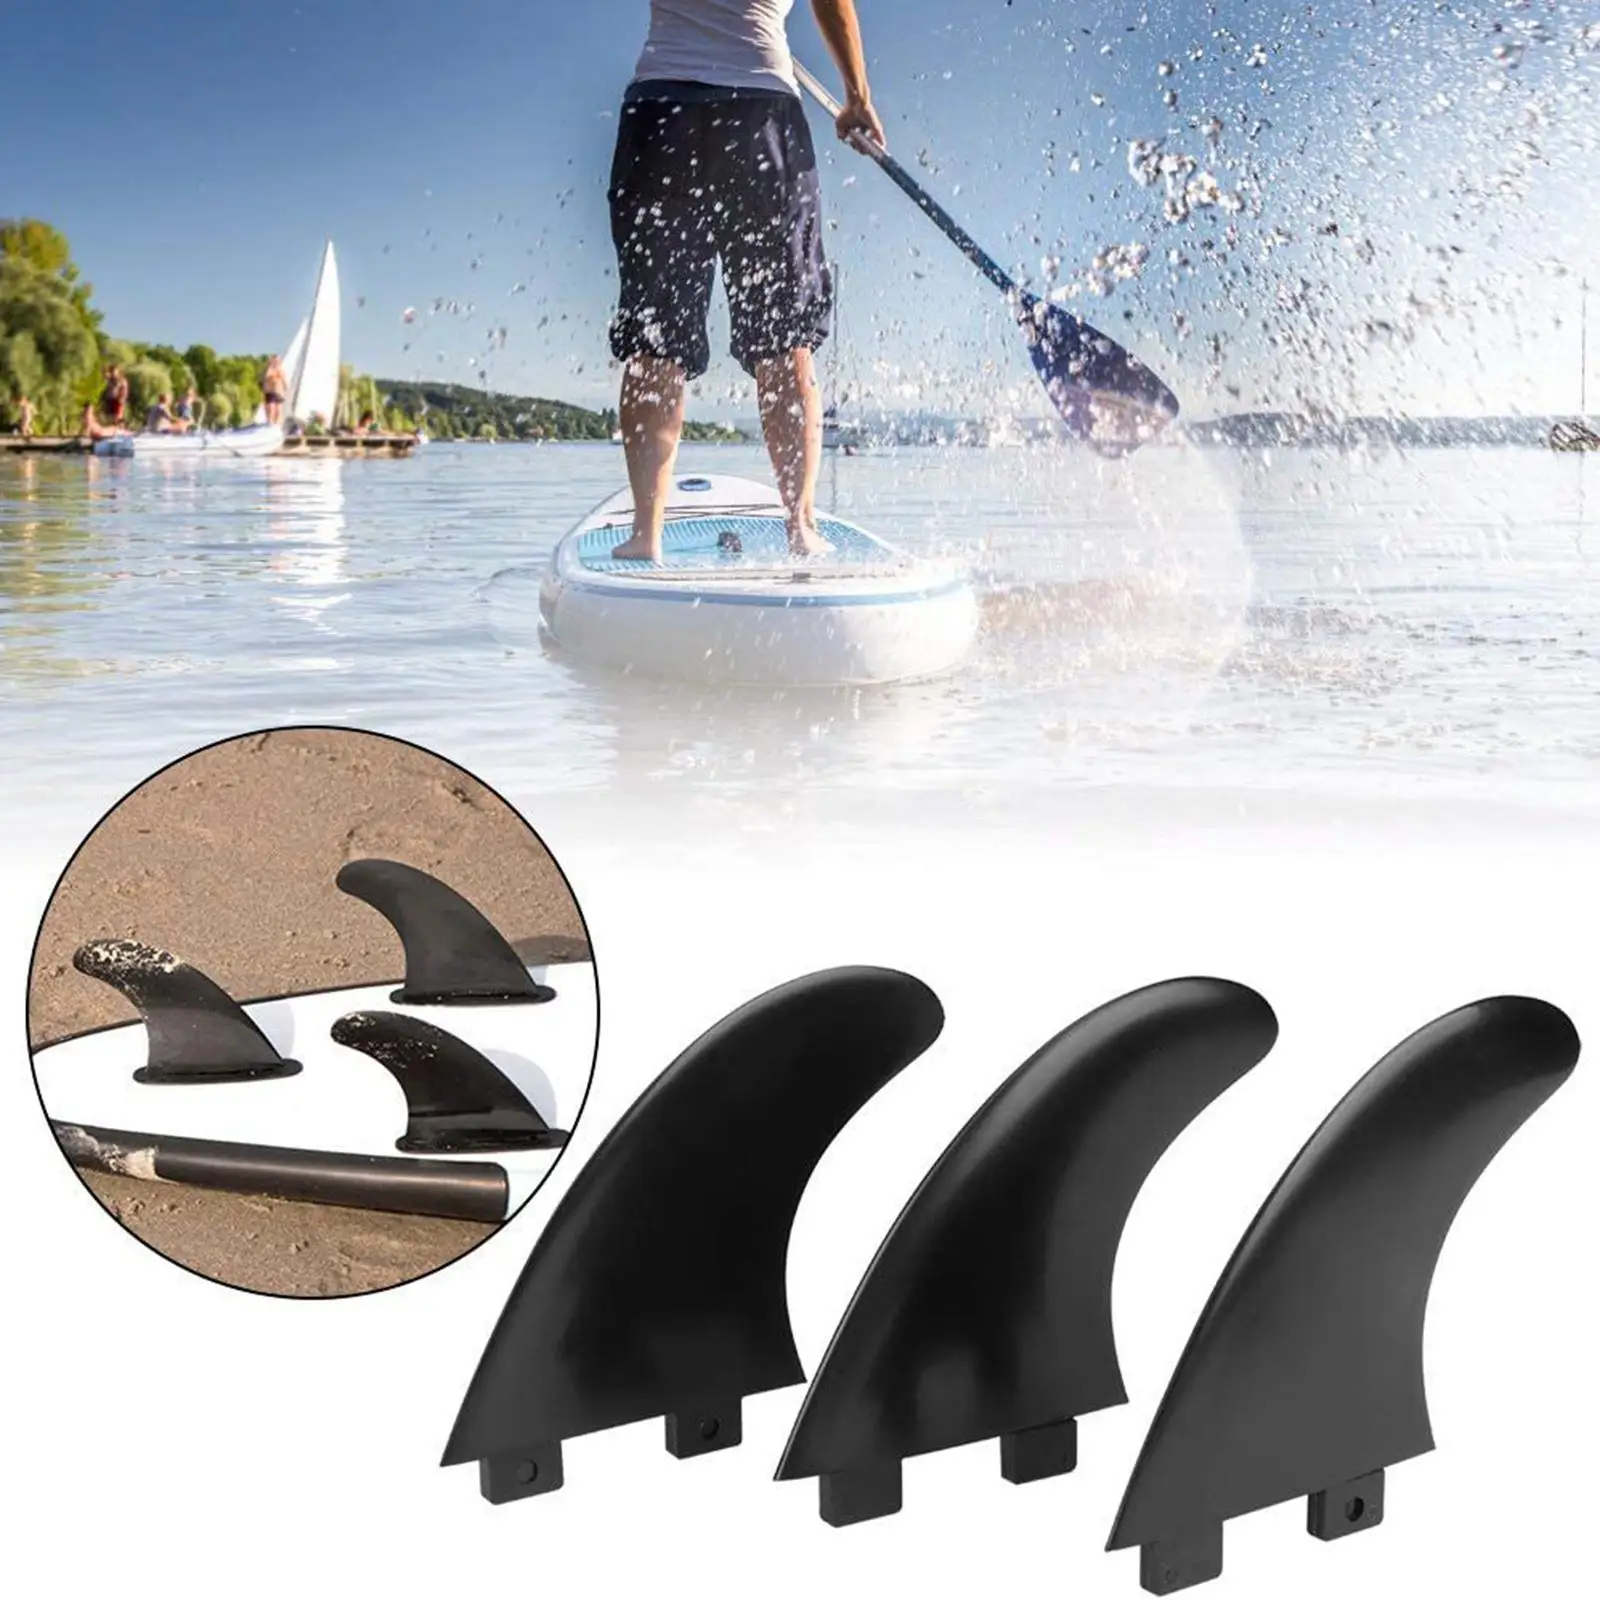 3x Surfboard Fin Paddleboard Fin Detachable Longboard Center Surfing Fin for Water Sports ,Foam Surfboard Dinghy Paddleboards